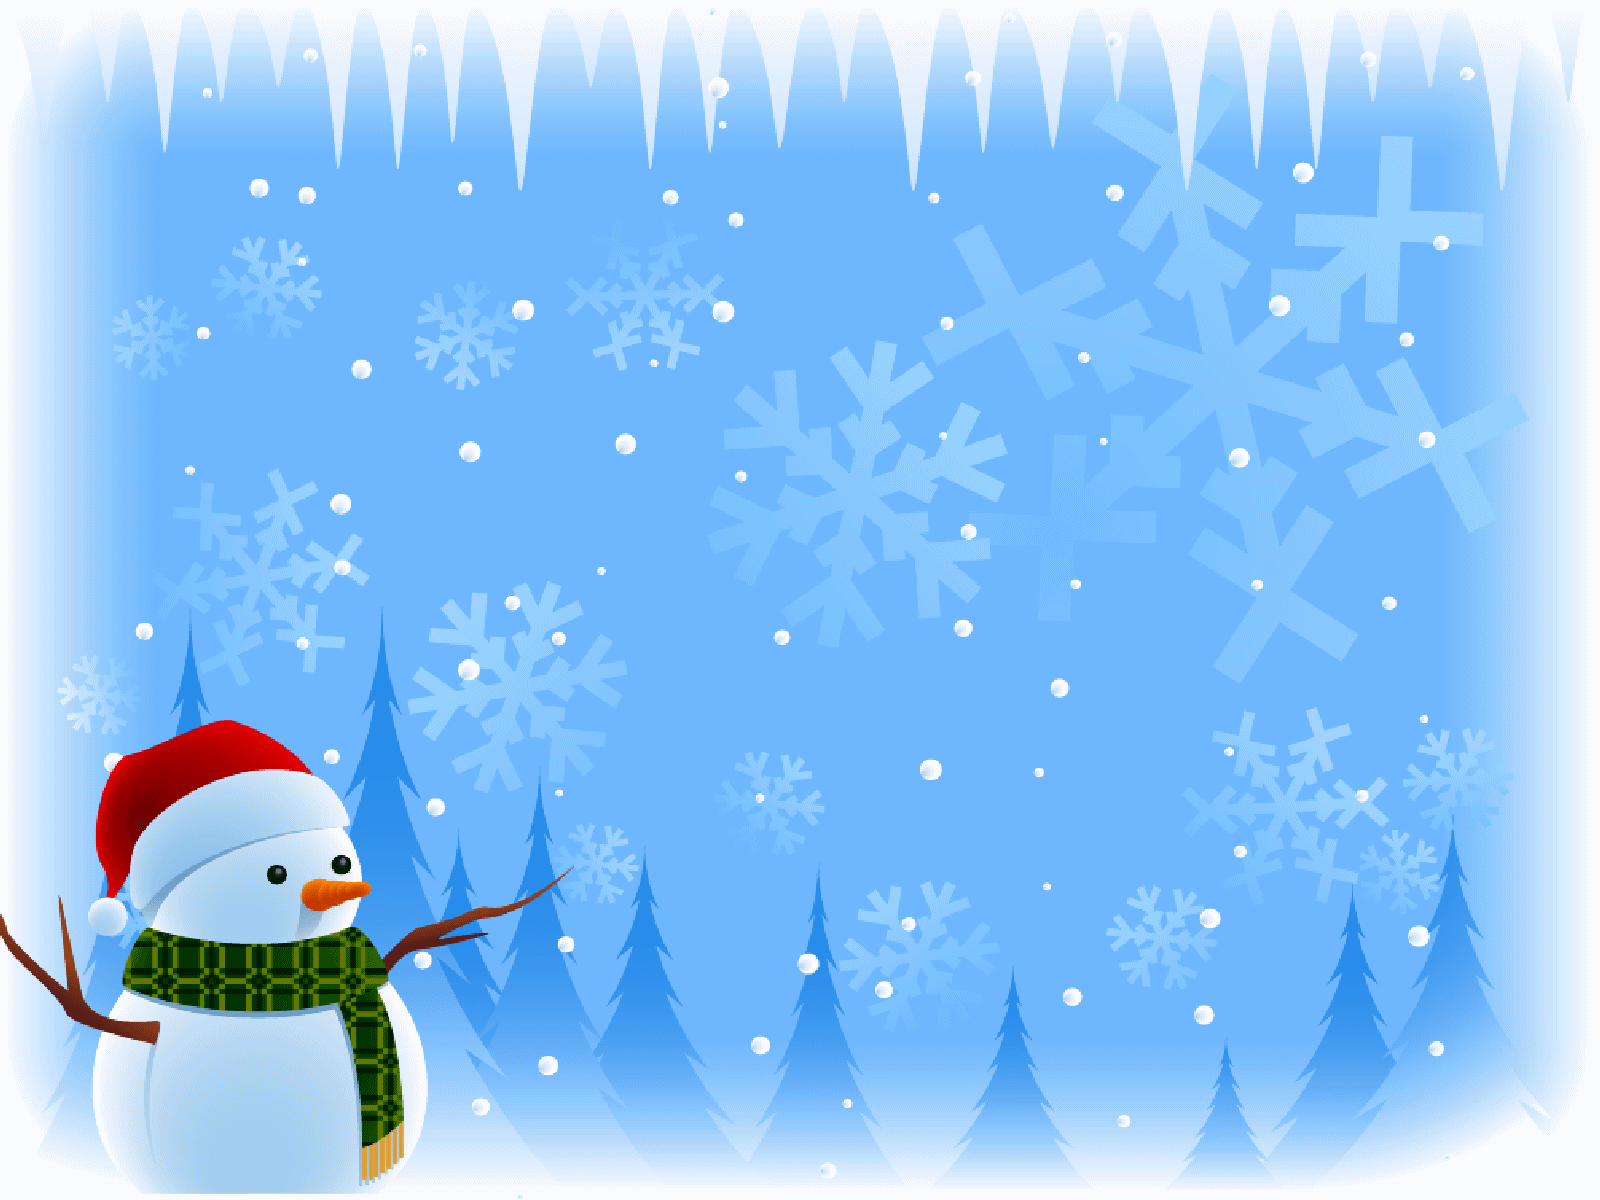 Christmas Snowman cartoon drawings image for kids